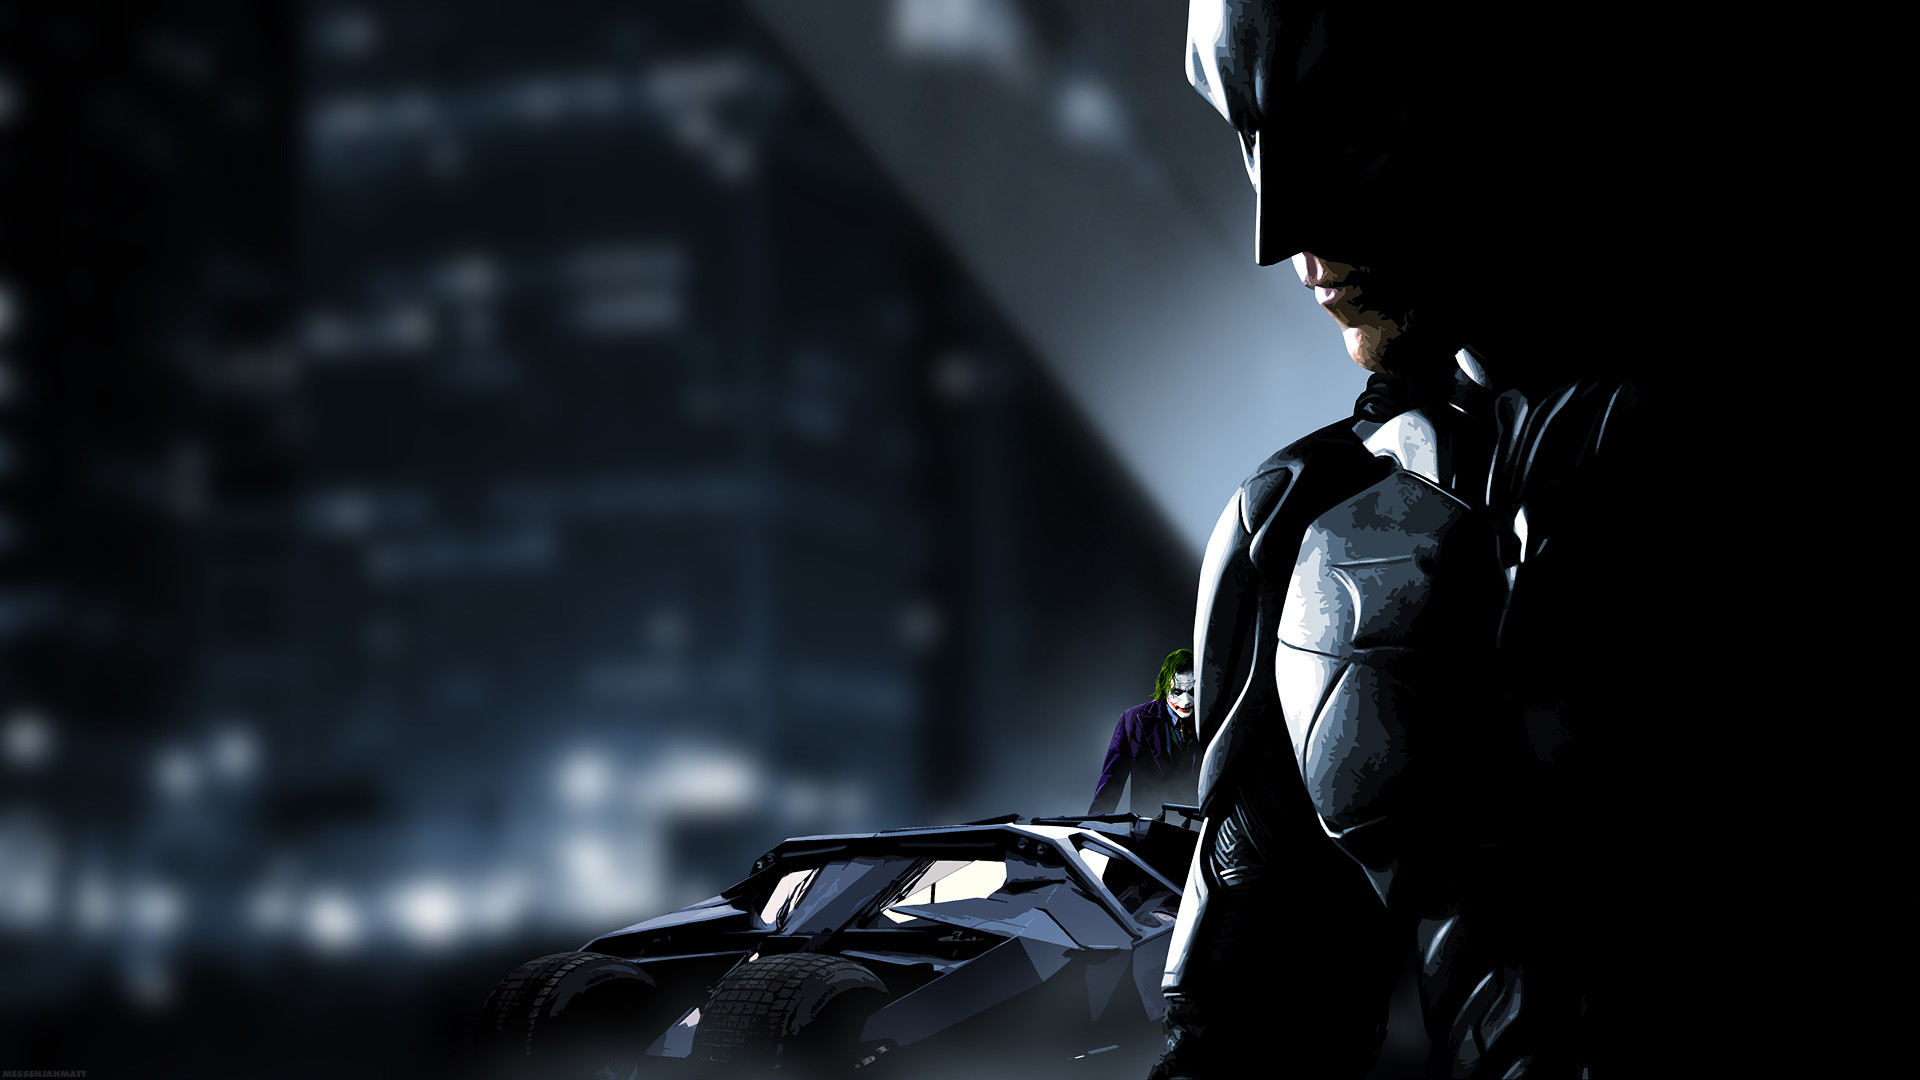 25 beste ideen over Hd batman wallpaper op Pinterest – Batman, Batman poster en Superhelden